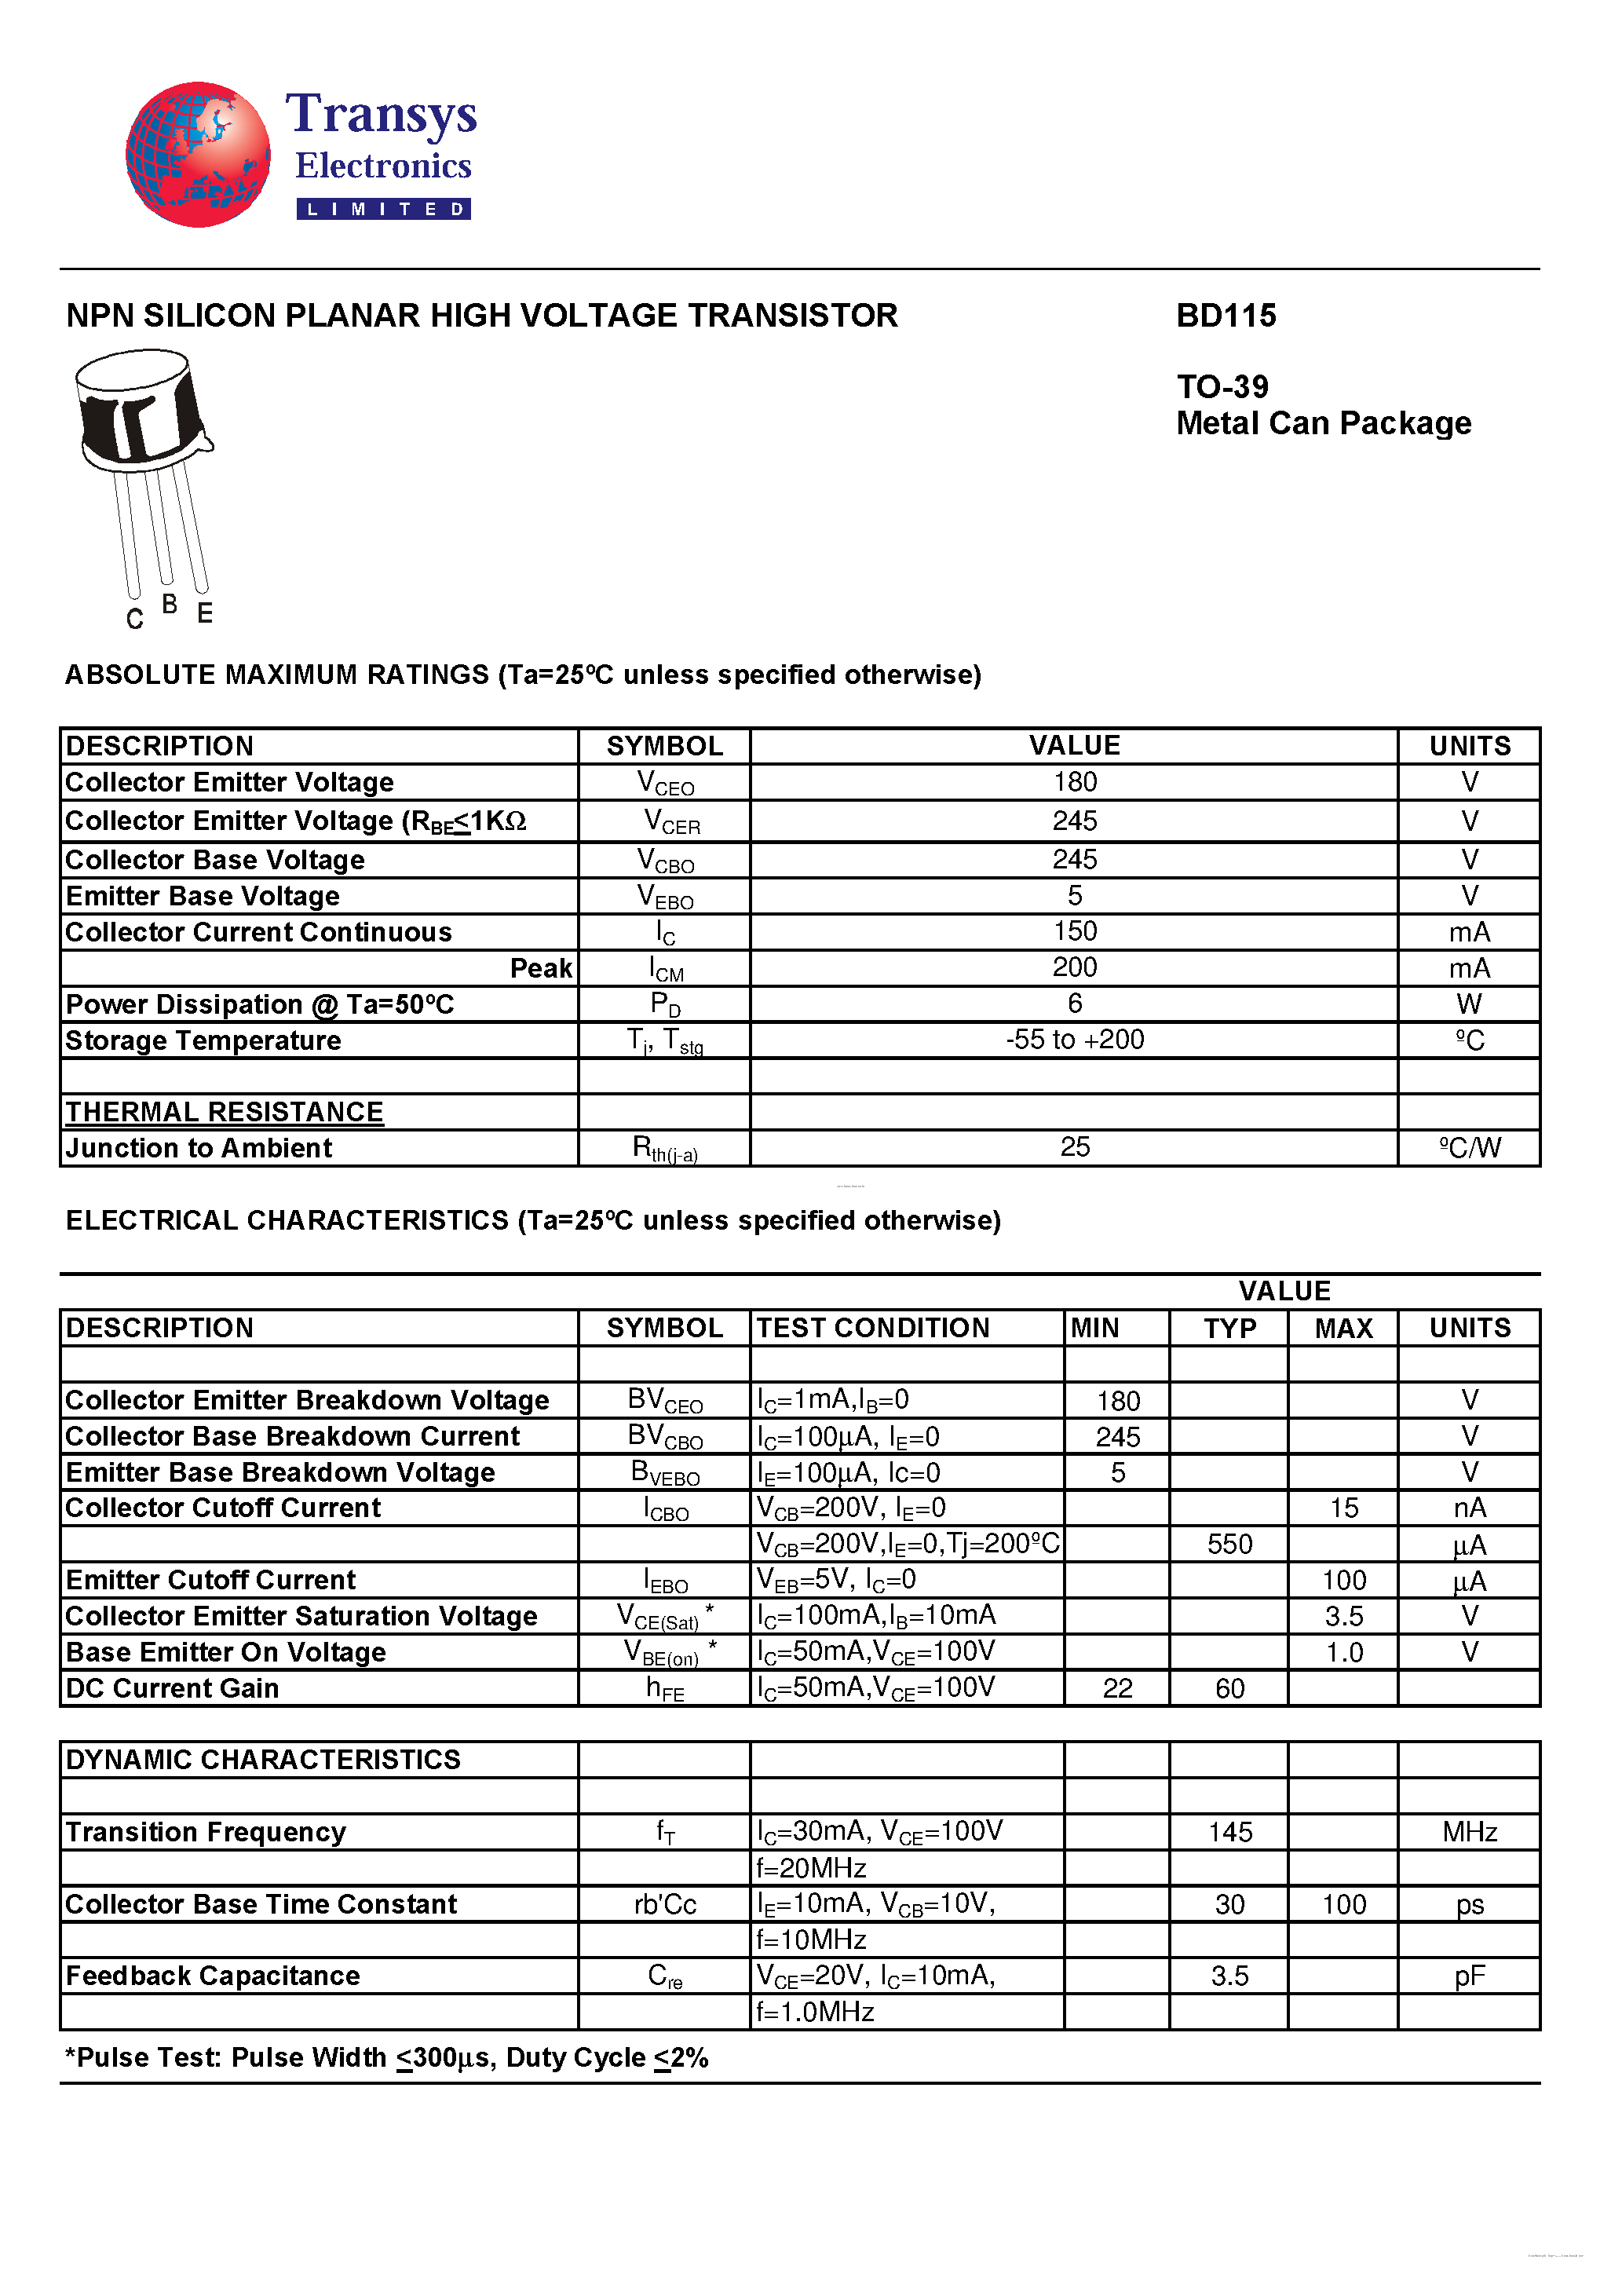 Datasheet BD115 - NPN SILICON PLANAR HIGH VOLTAGE TRANSISTOR page 1